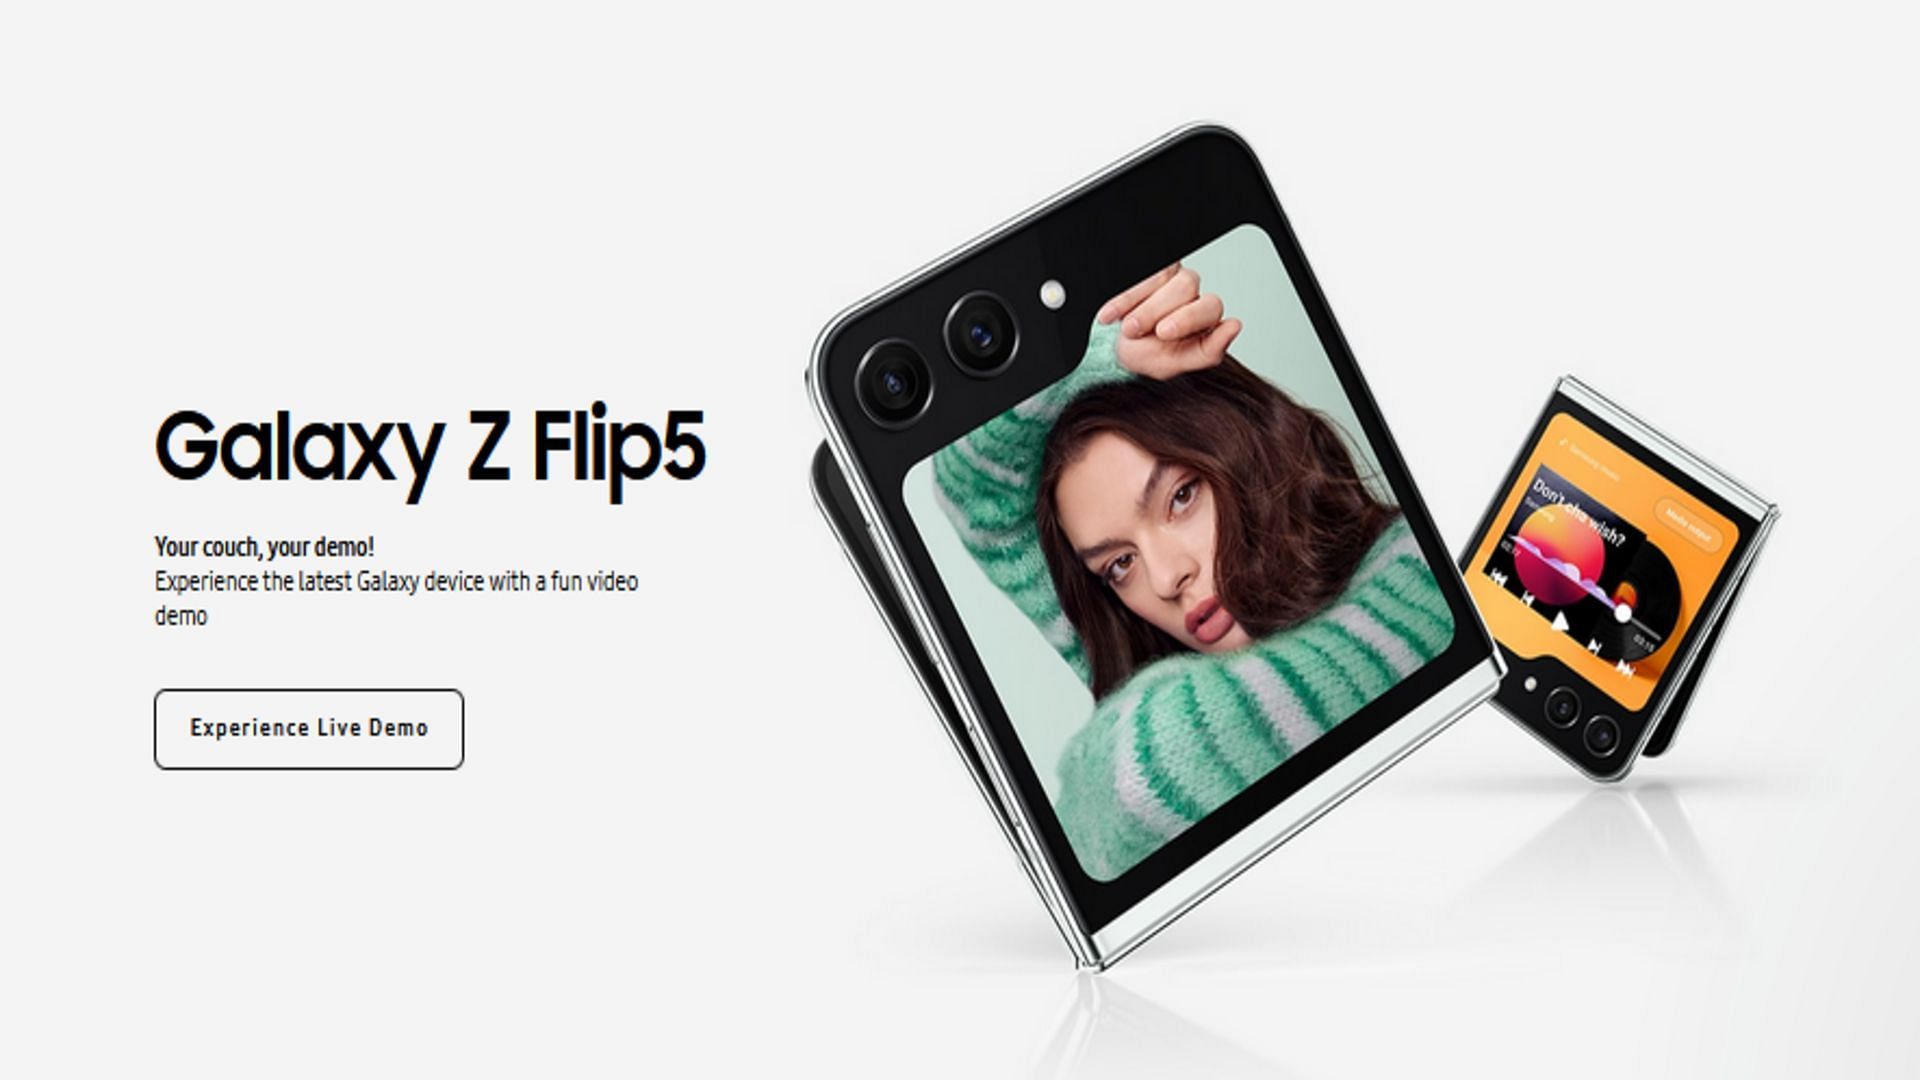 Samsung Galaxy Z Flip 5 (Image via Samsung)